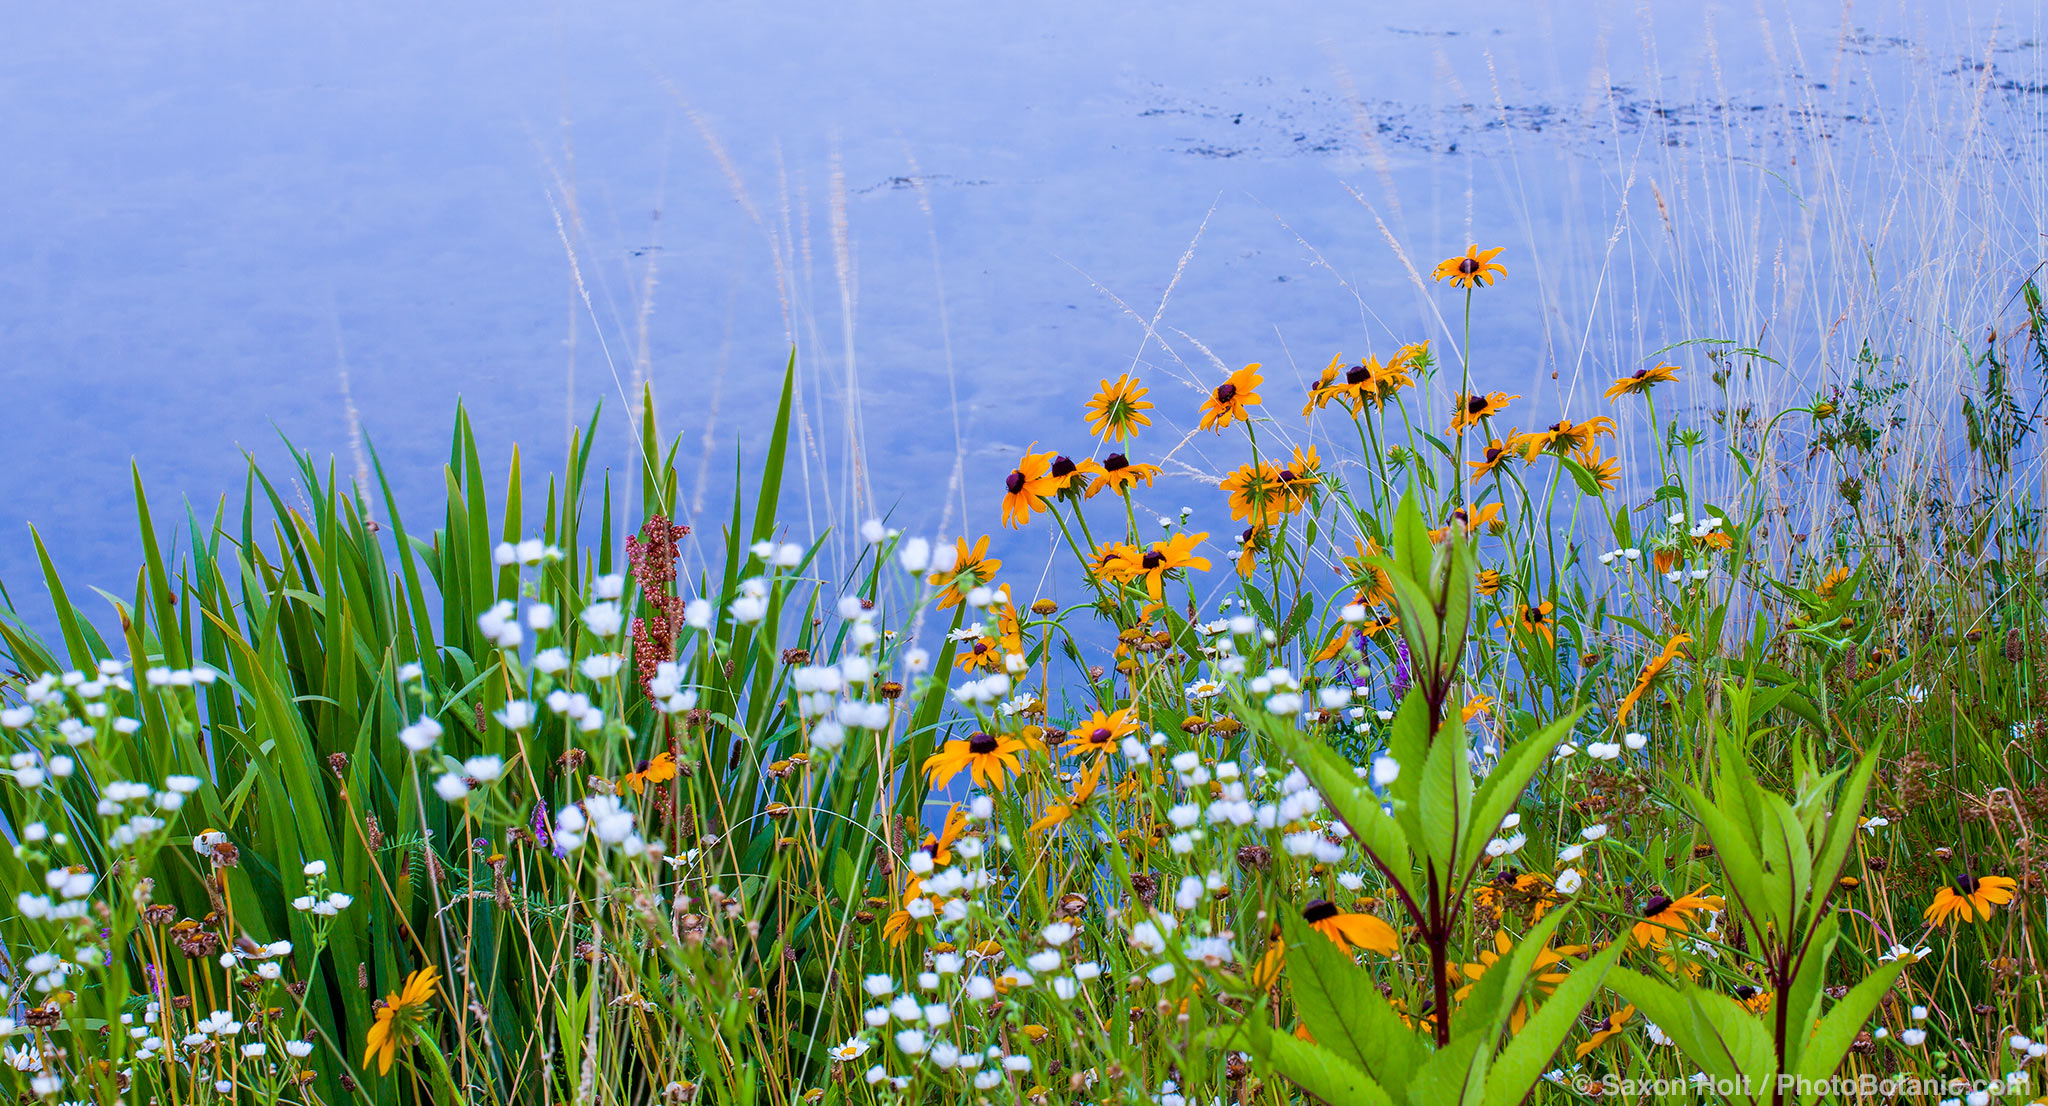 Connecticut meadow garden with native wildflowers; Larry Weiner Design